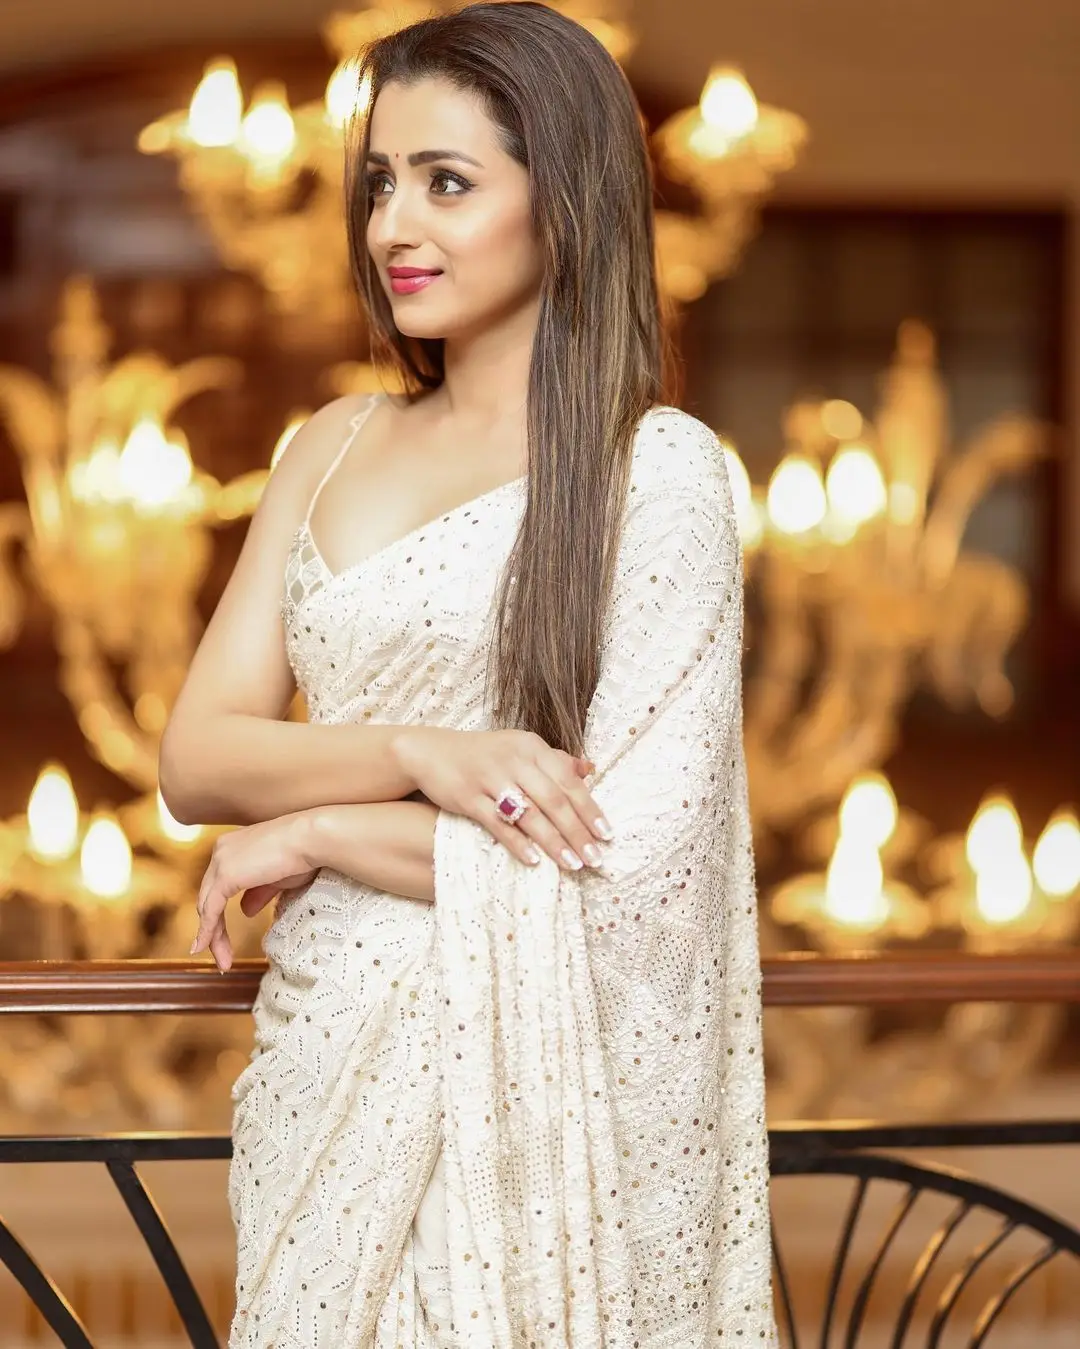 Trisha Krishnan Mesmerizing Looks In Beautiful White Designer Saree